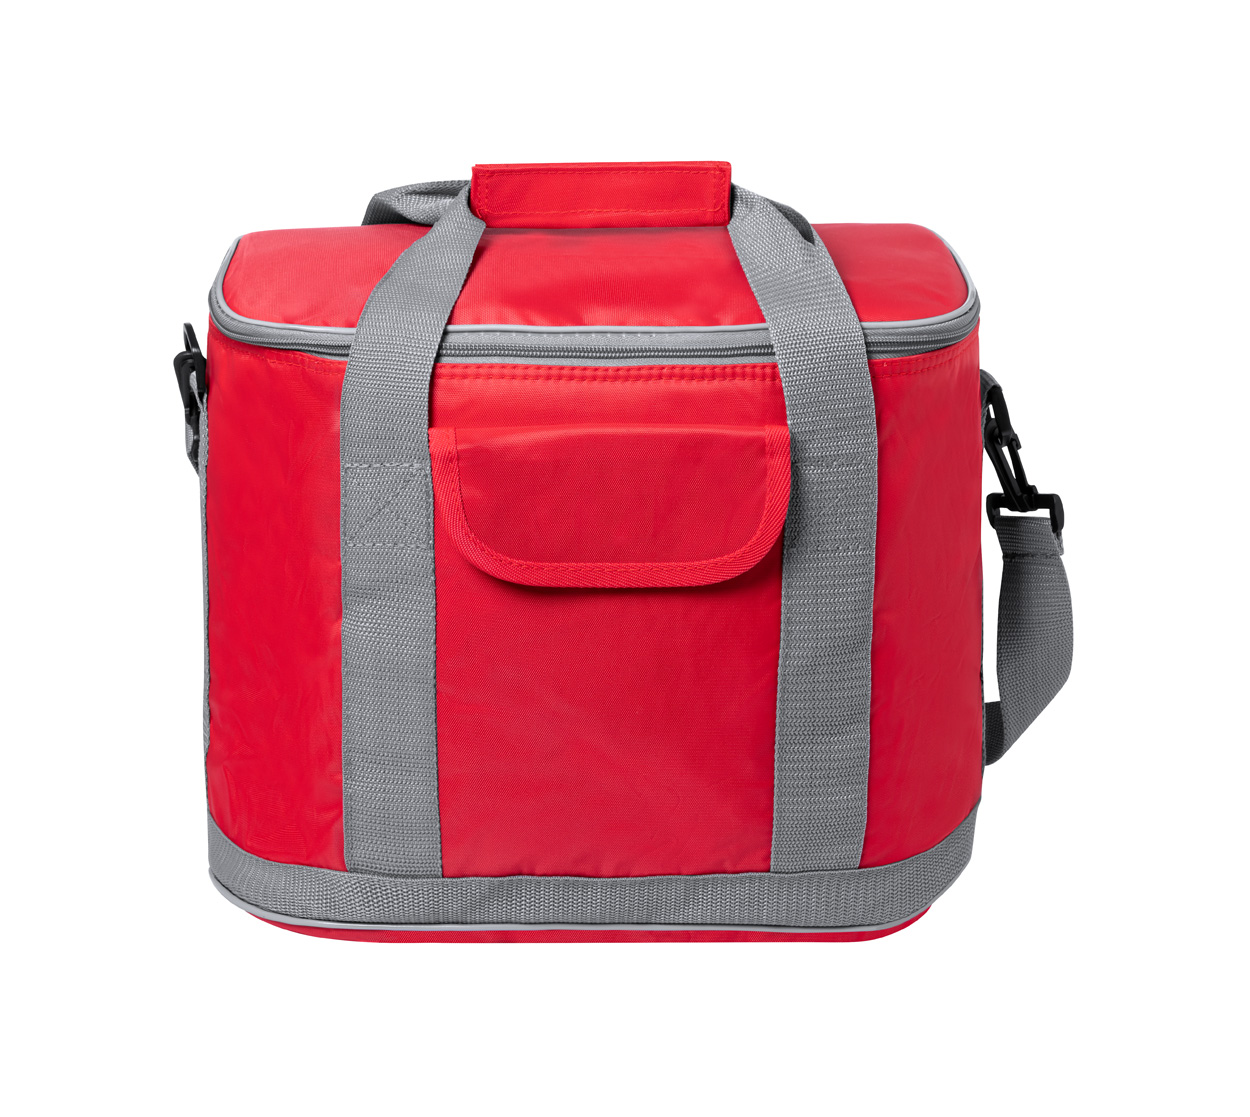 Sindy cooler bag - red